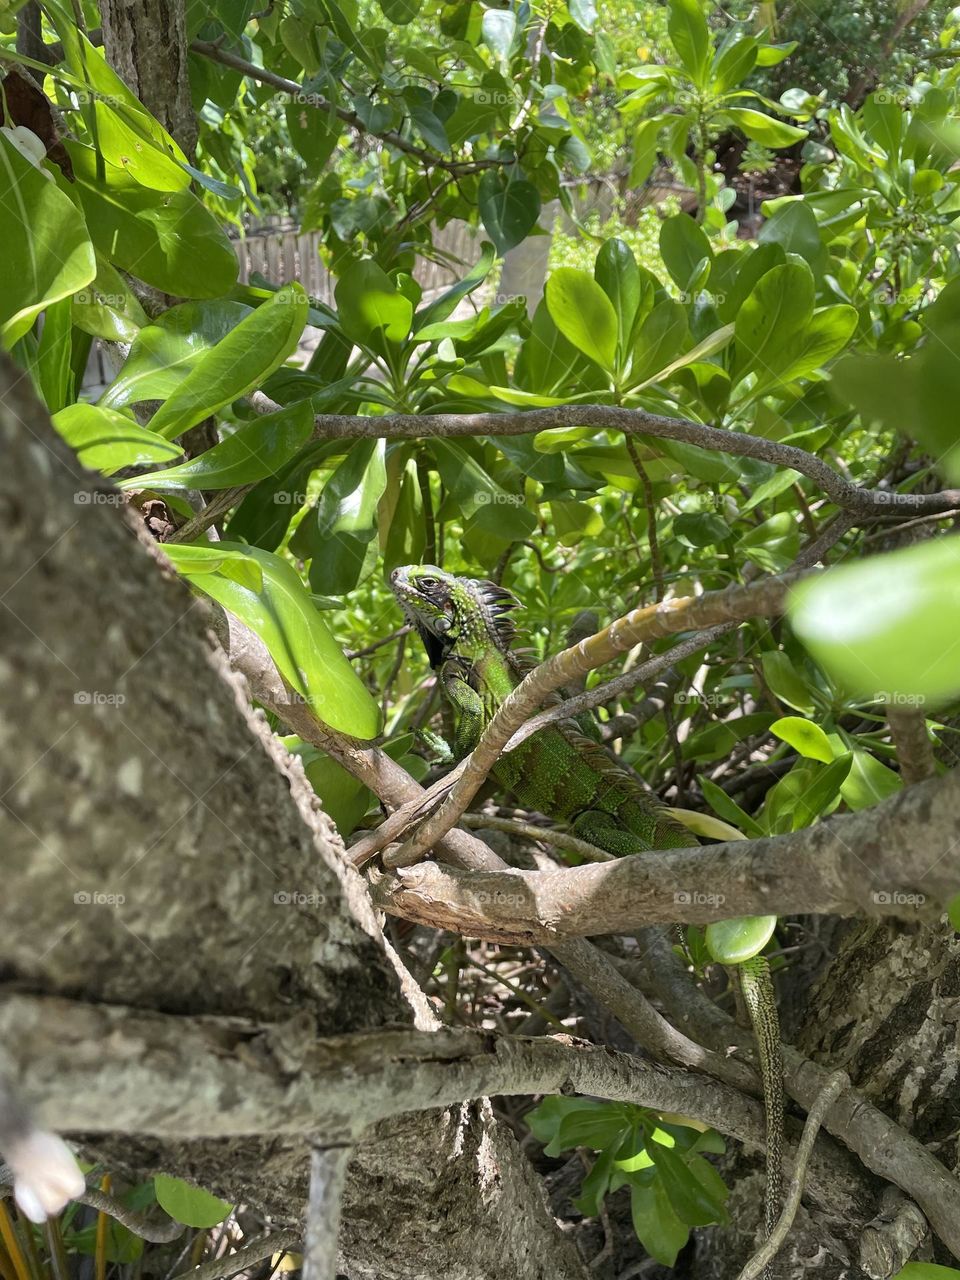 Iguana sunbathing in its natural wild habitat 